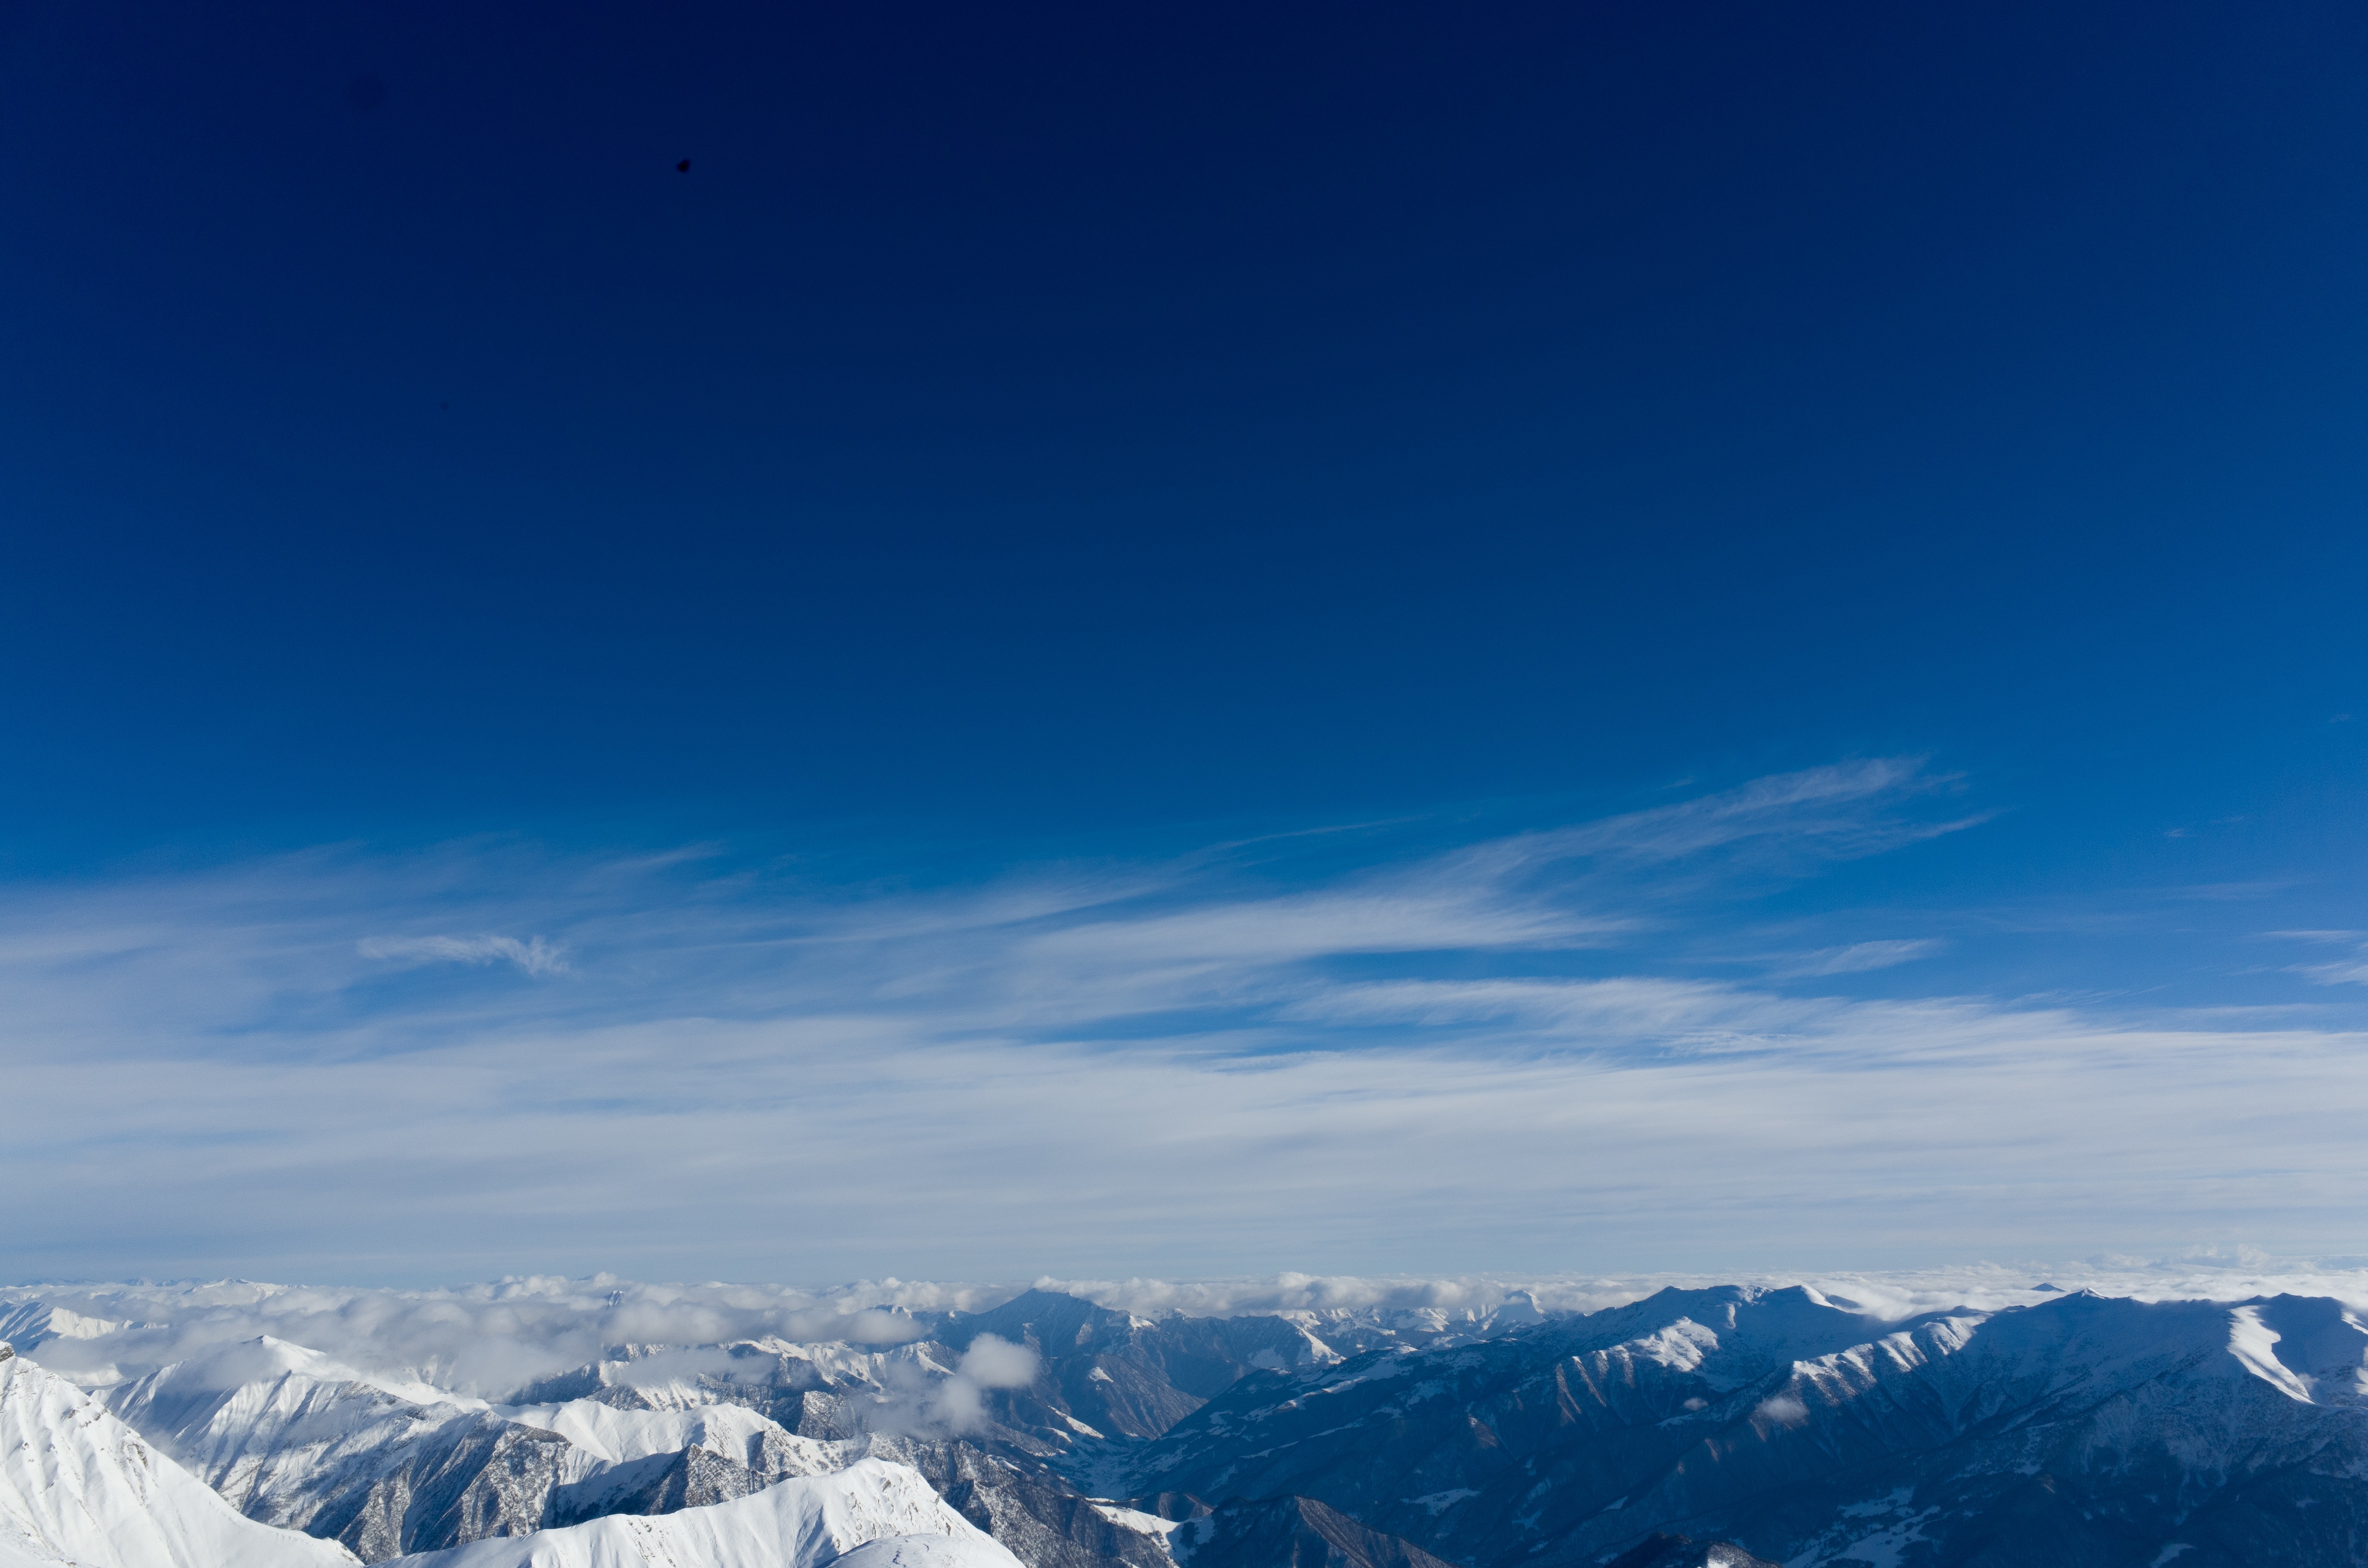 Mountainous winter terrain against the blue sky